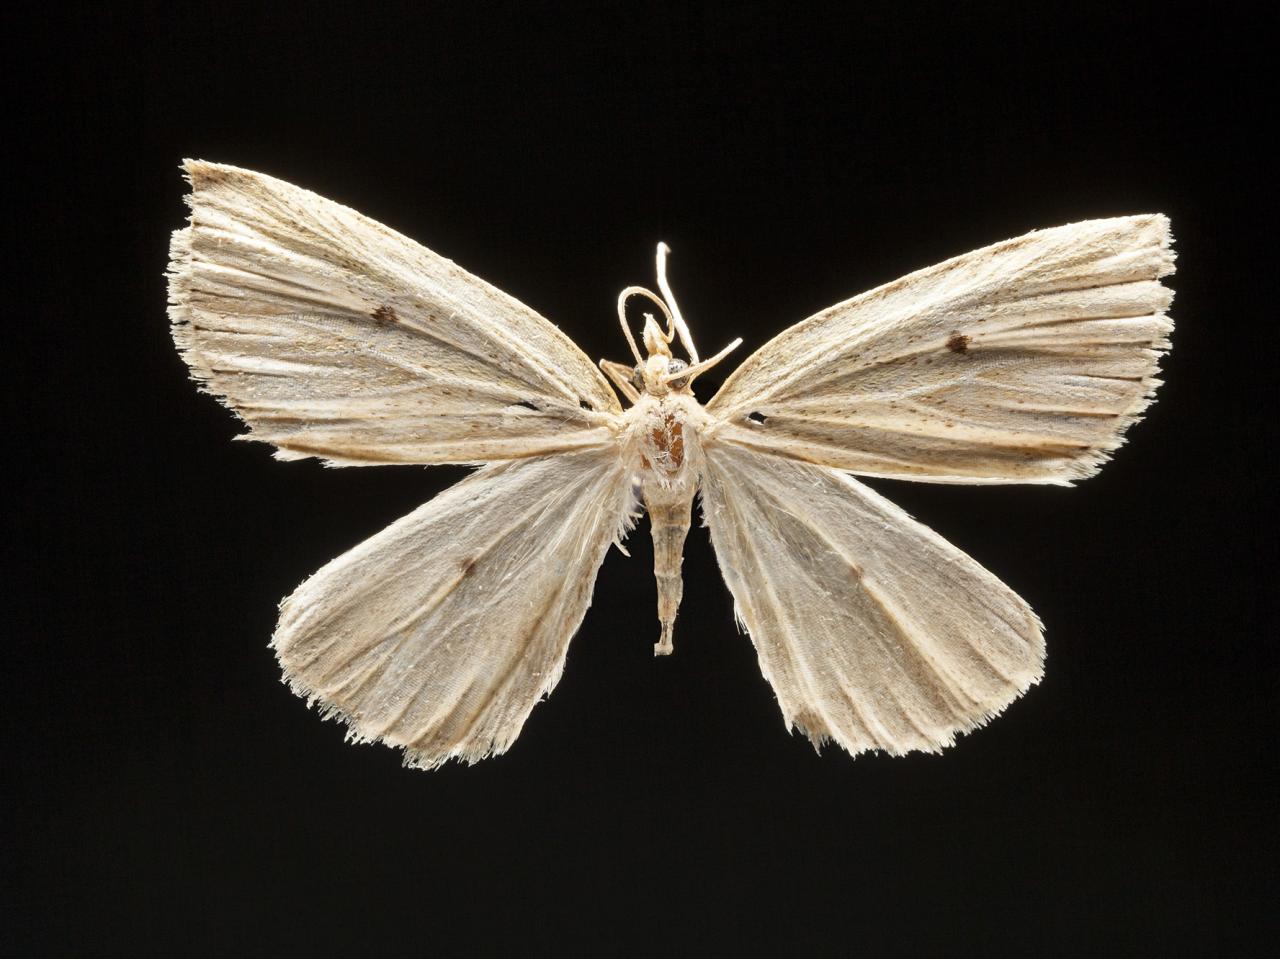  Psilaspilates concepcionensis Parra, 1999